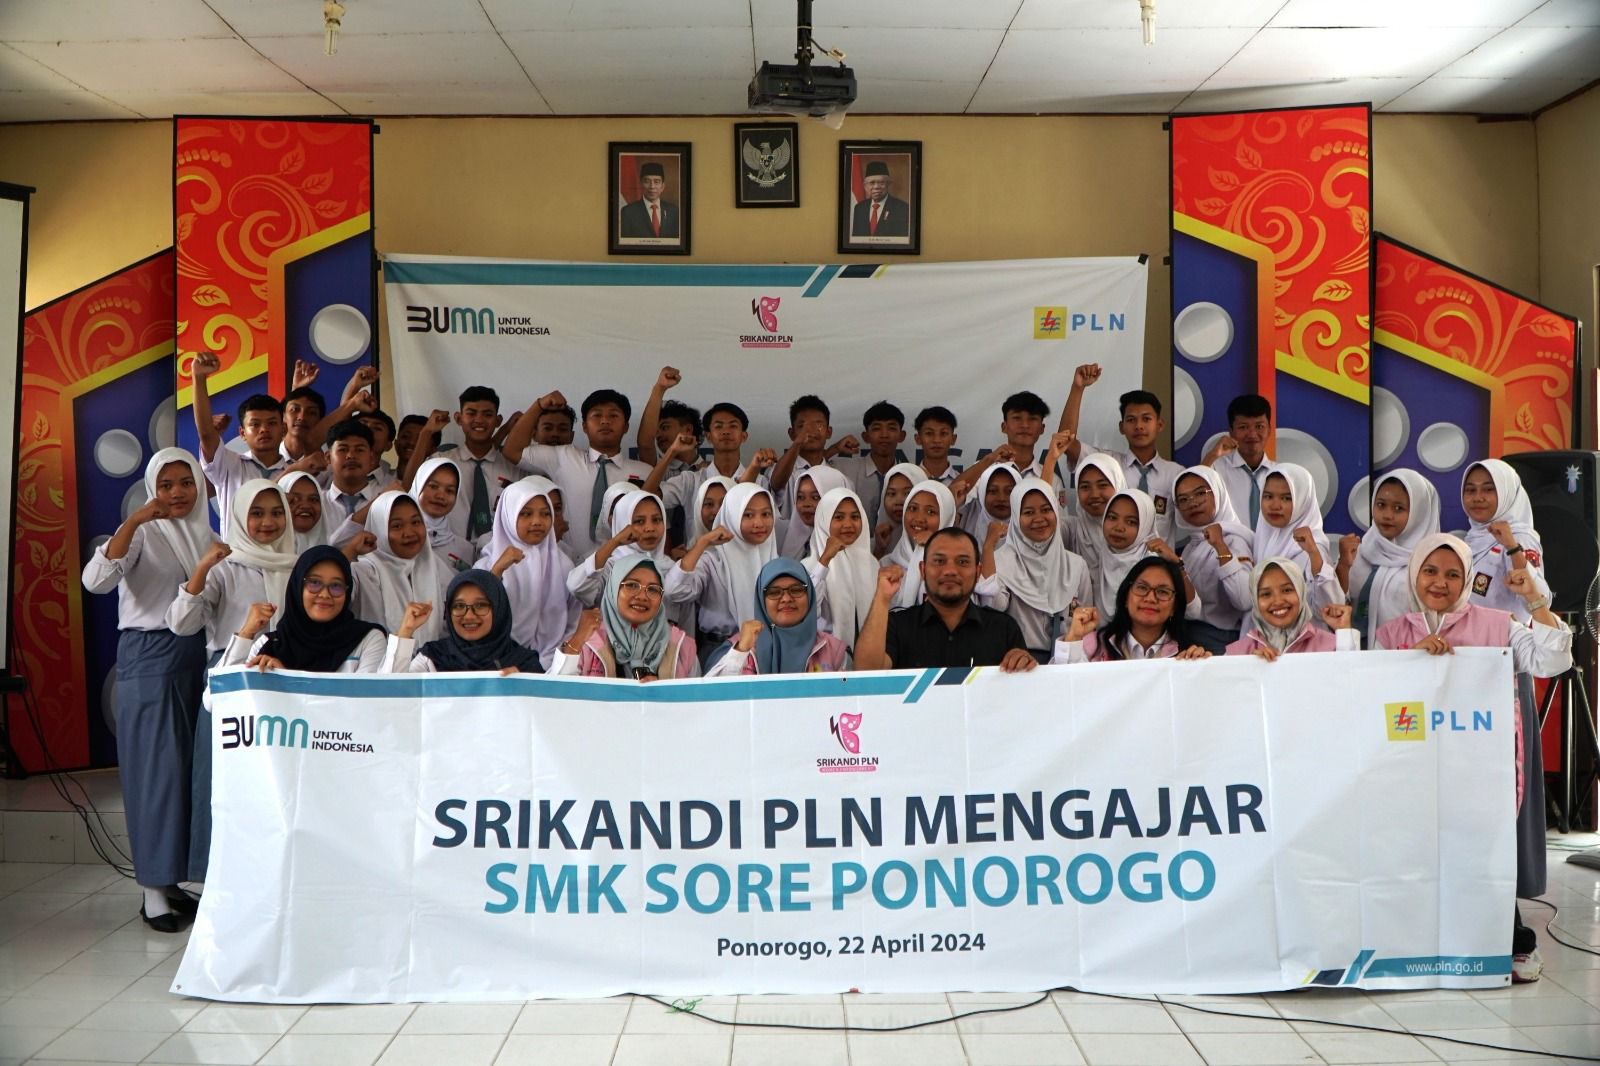 Peringatan Hari Kartini: Srikandi PLN Berikan Edukasi ke Siswi SMK Sore 1 Ponorogo, Beberkan Pengalaman dan Pengetahuan Soal Kelistrikan 